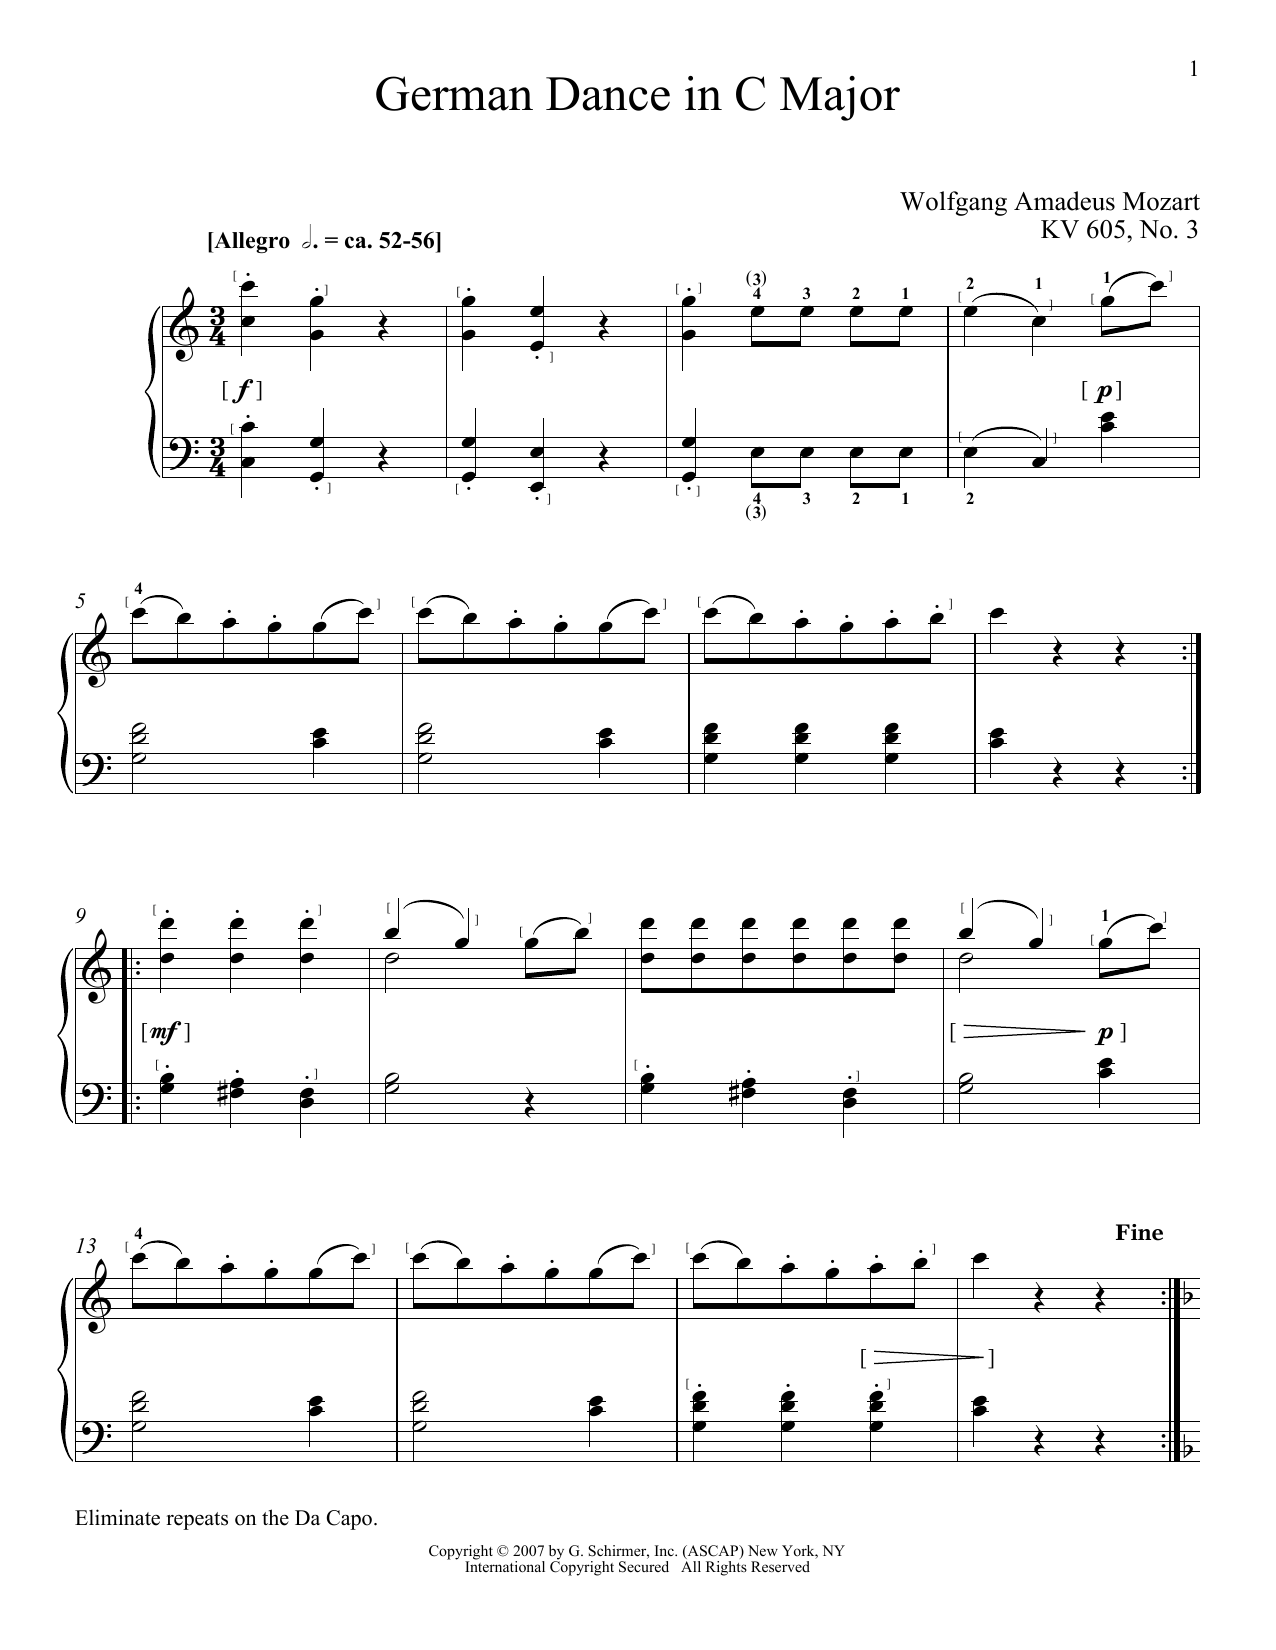 Wolfgang Amadeus Mozart German Dance In C Major, K605, No. 3 Sheet Music Notes & Chords for Guitar Tab - Download or Print PDF